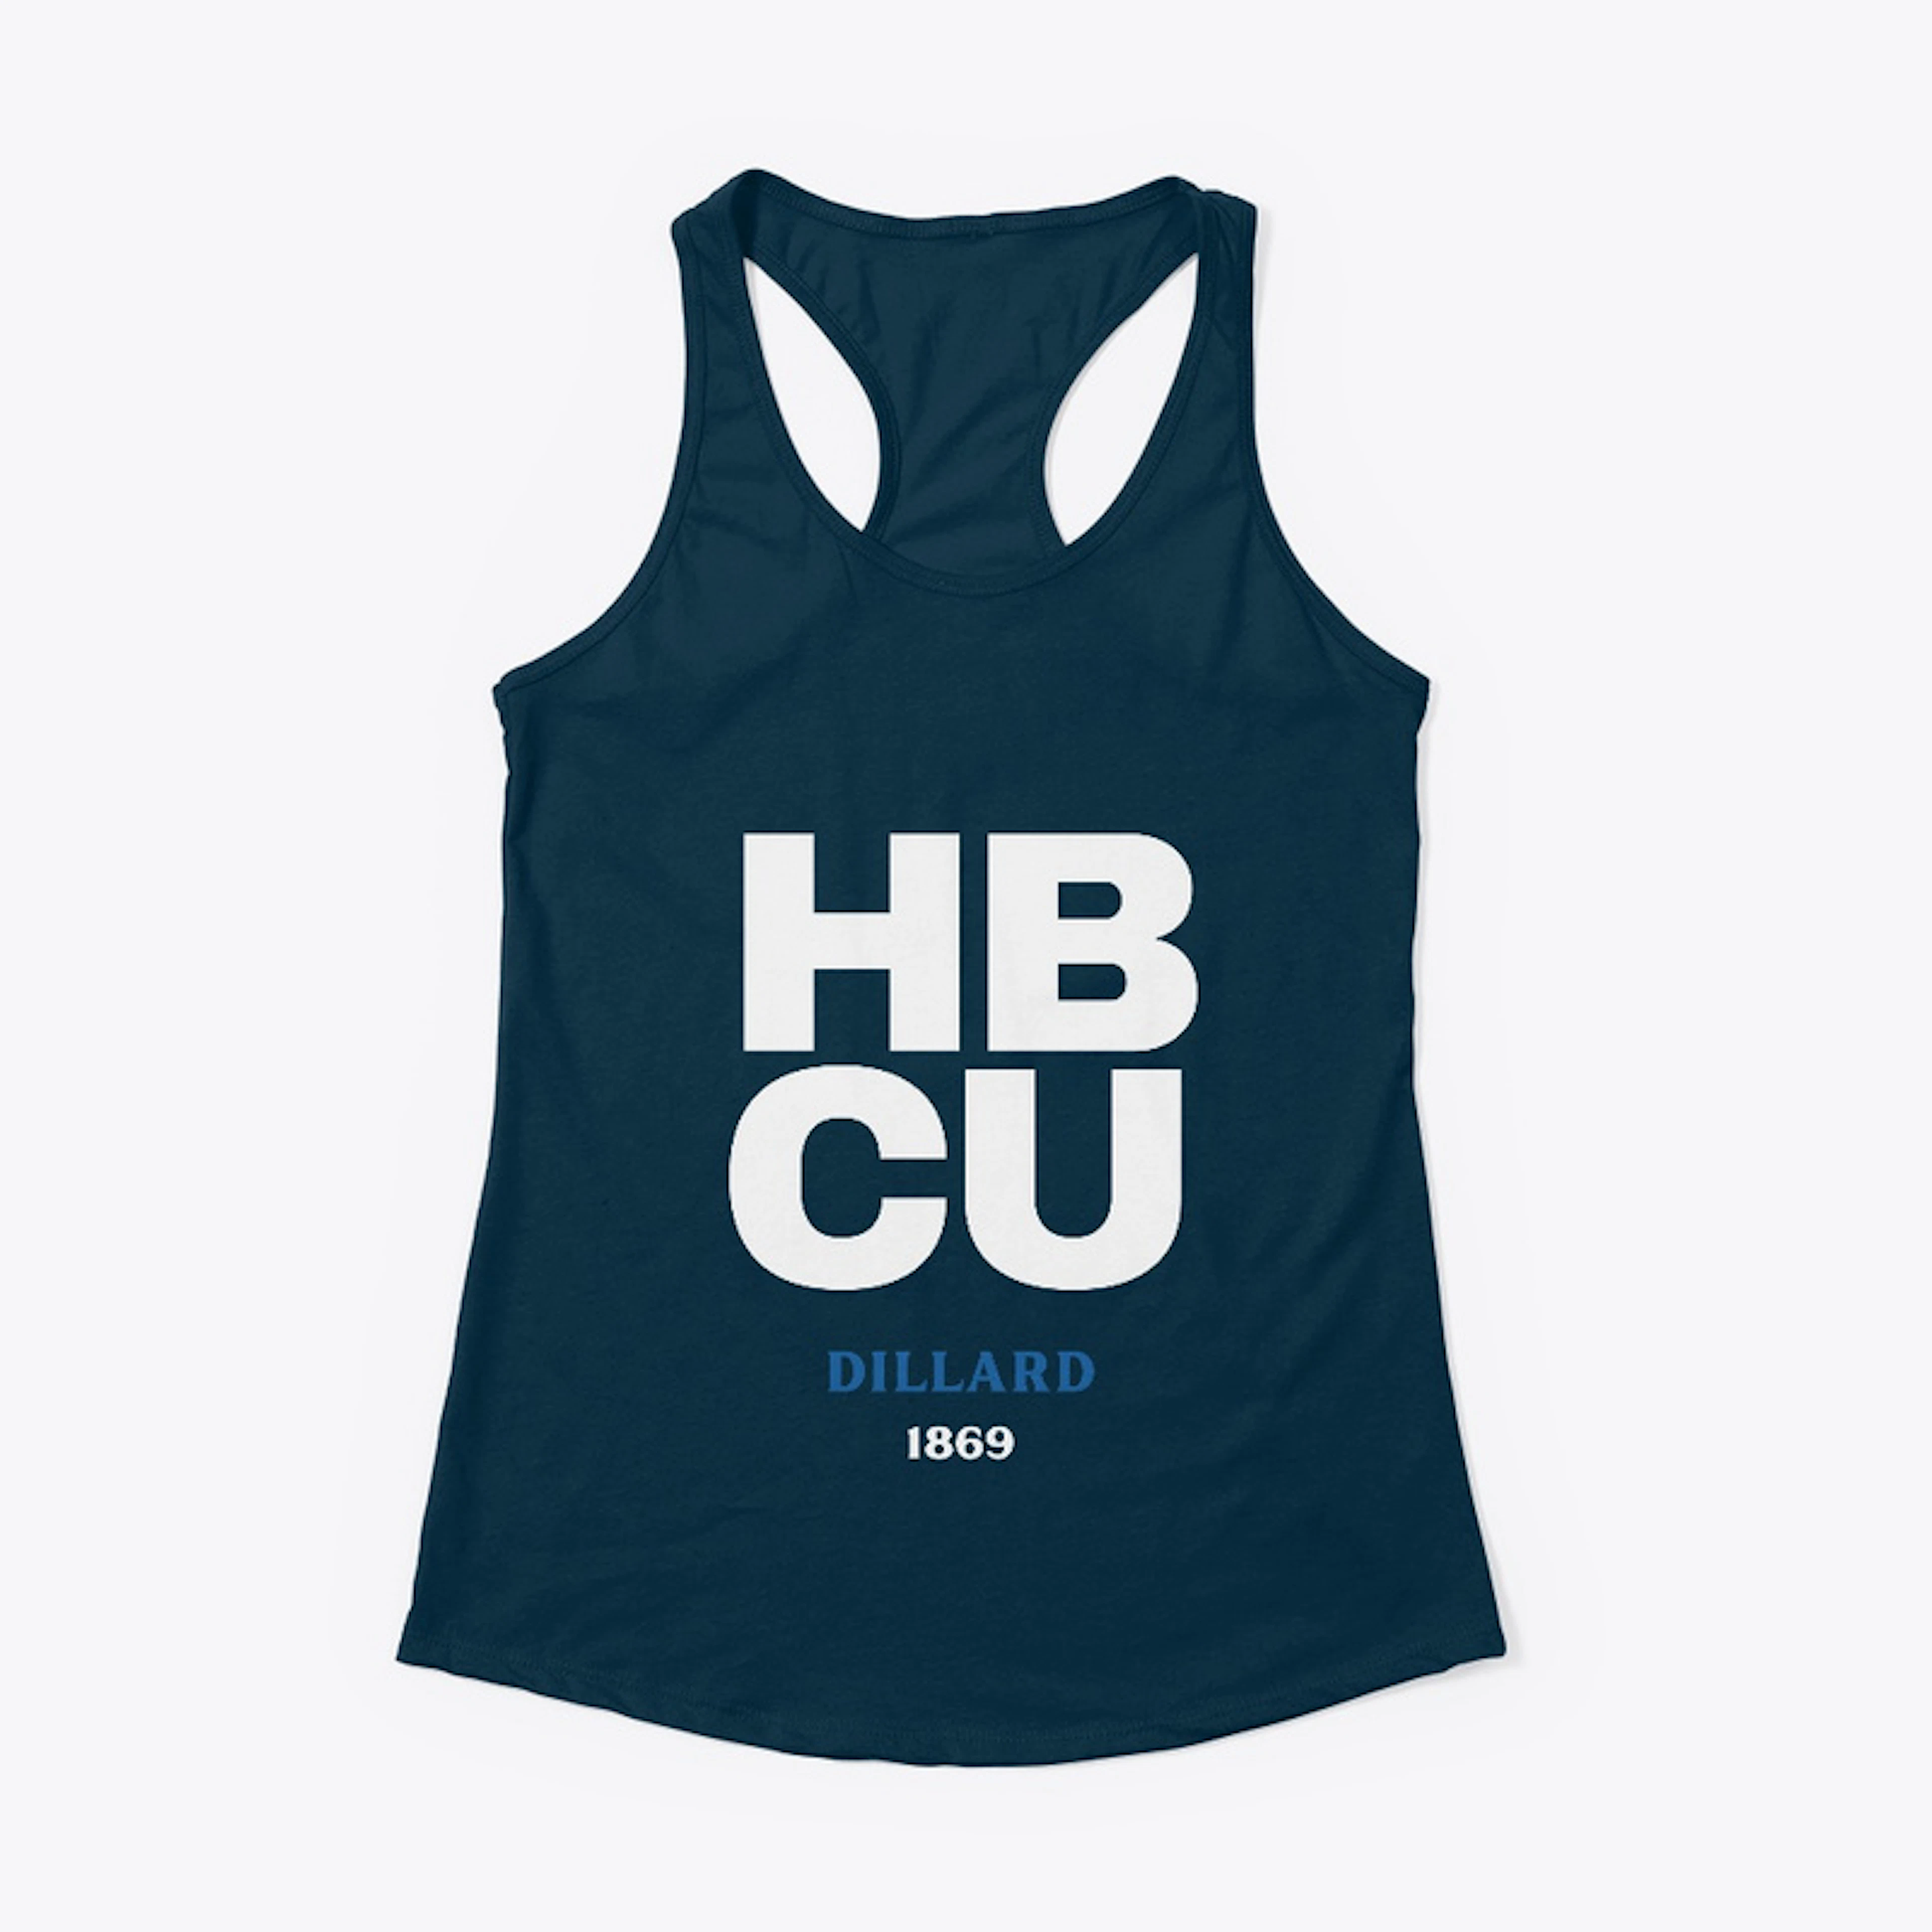 HBCU: Dillard University